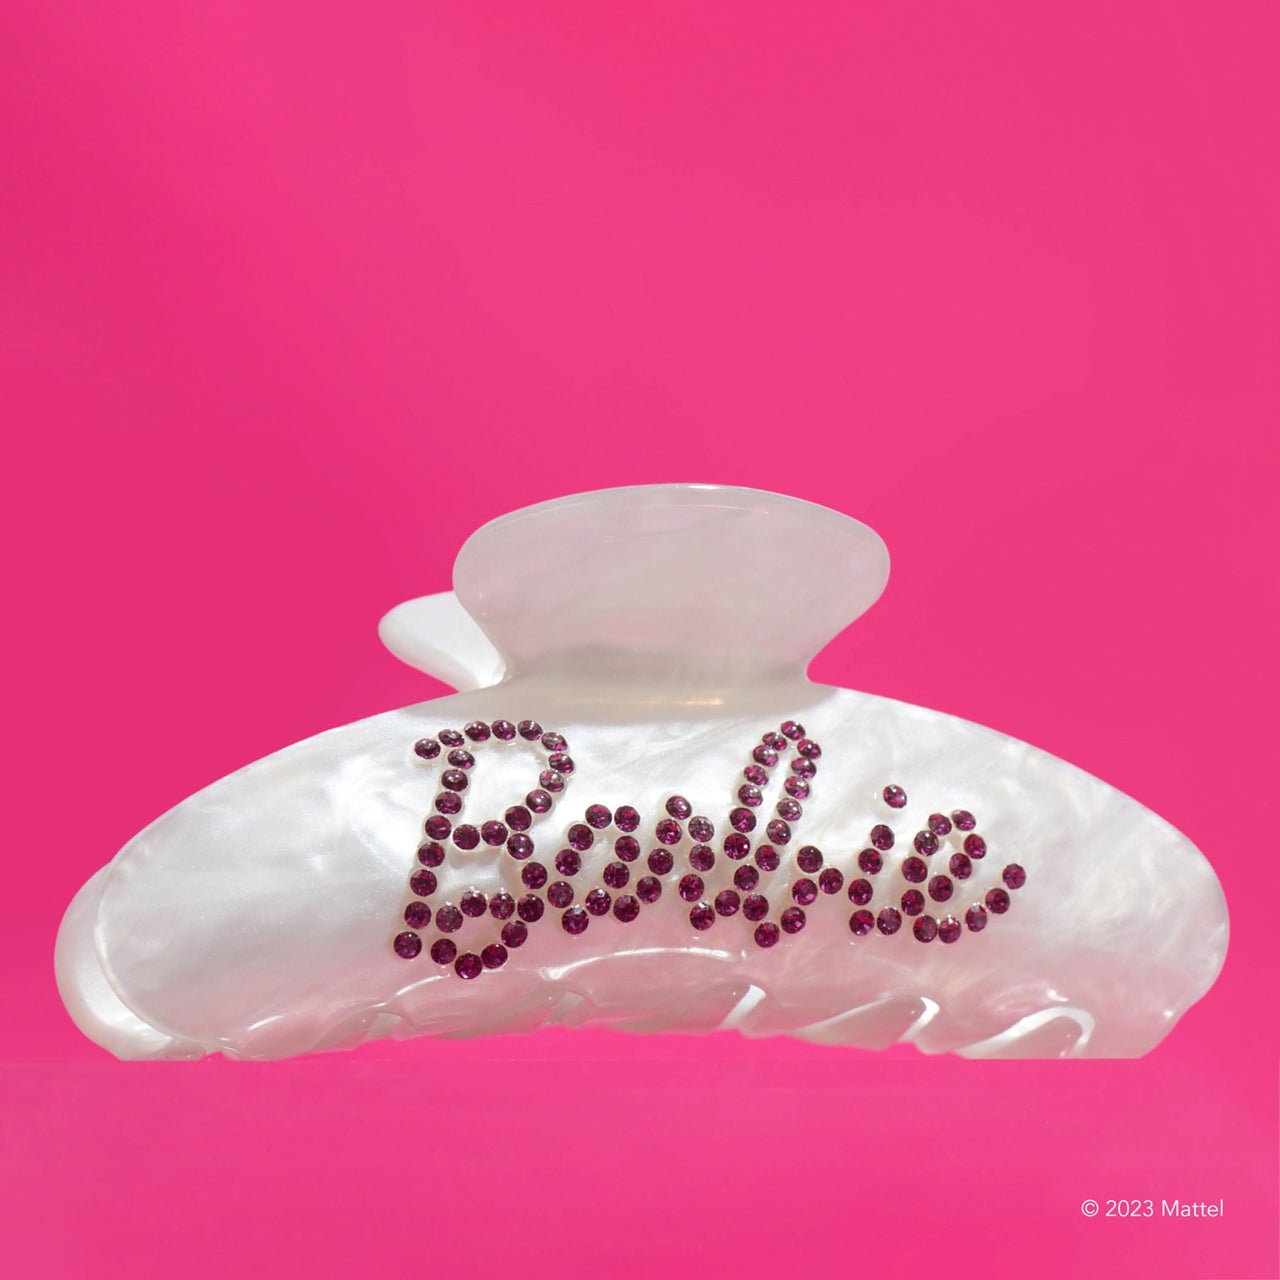 Barbie™ x Kitsch King Ensemble à collectionner